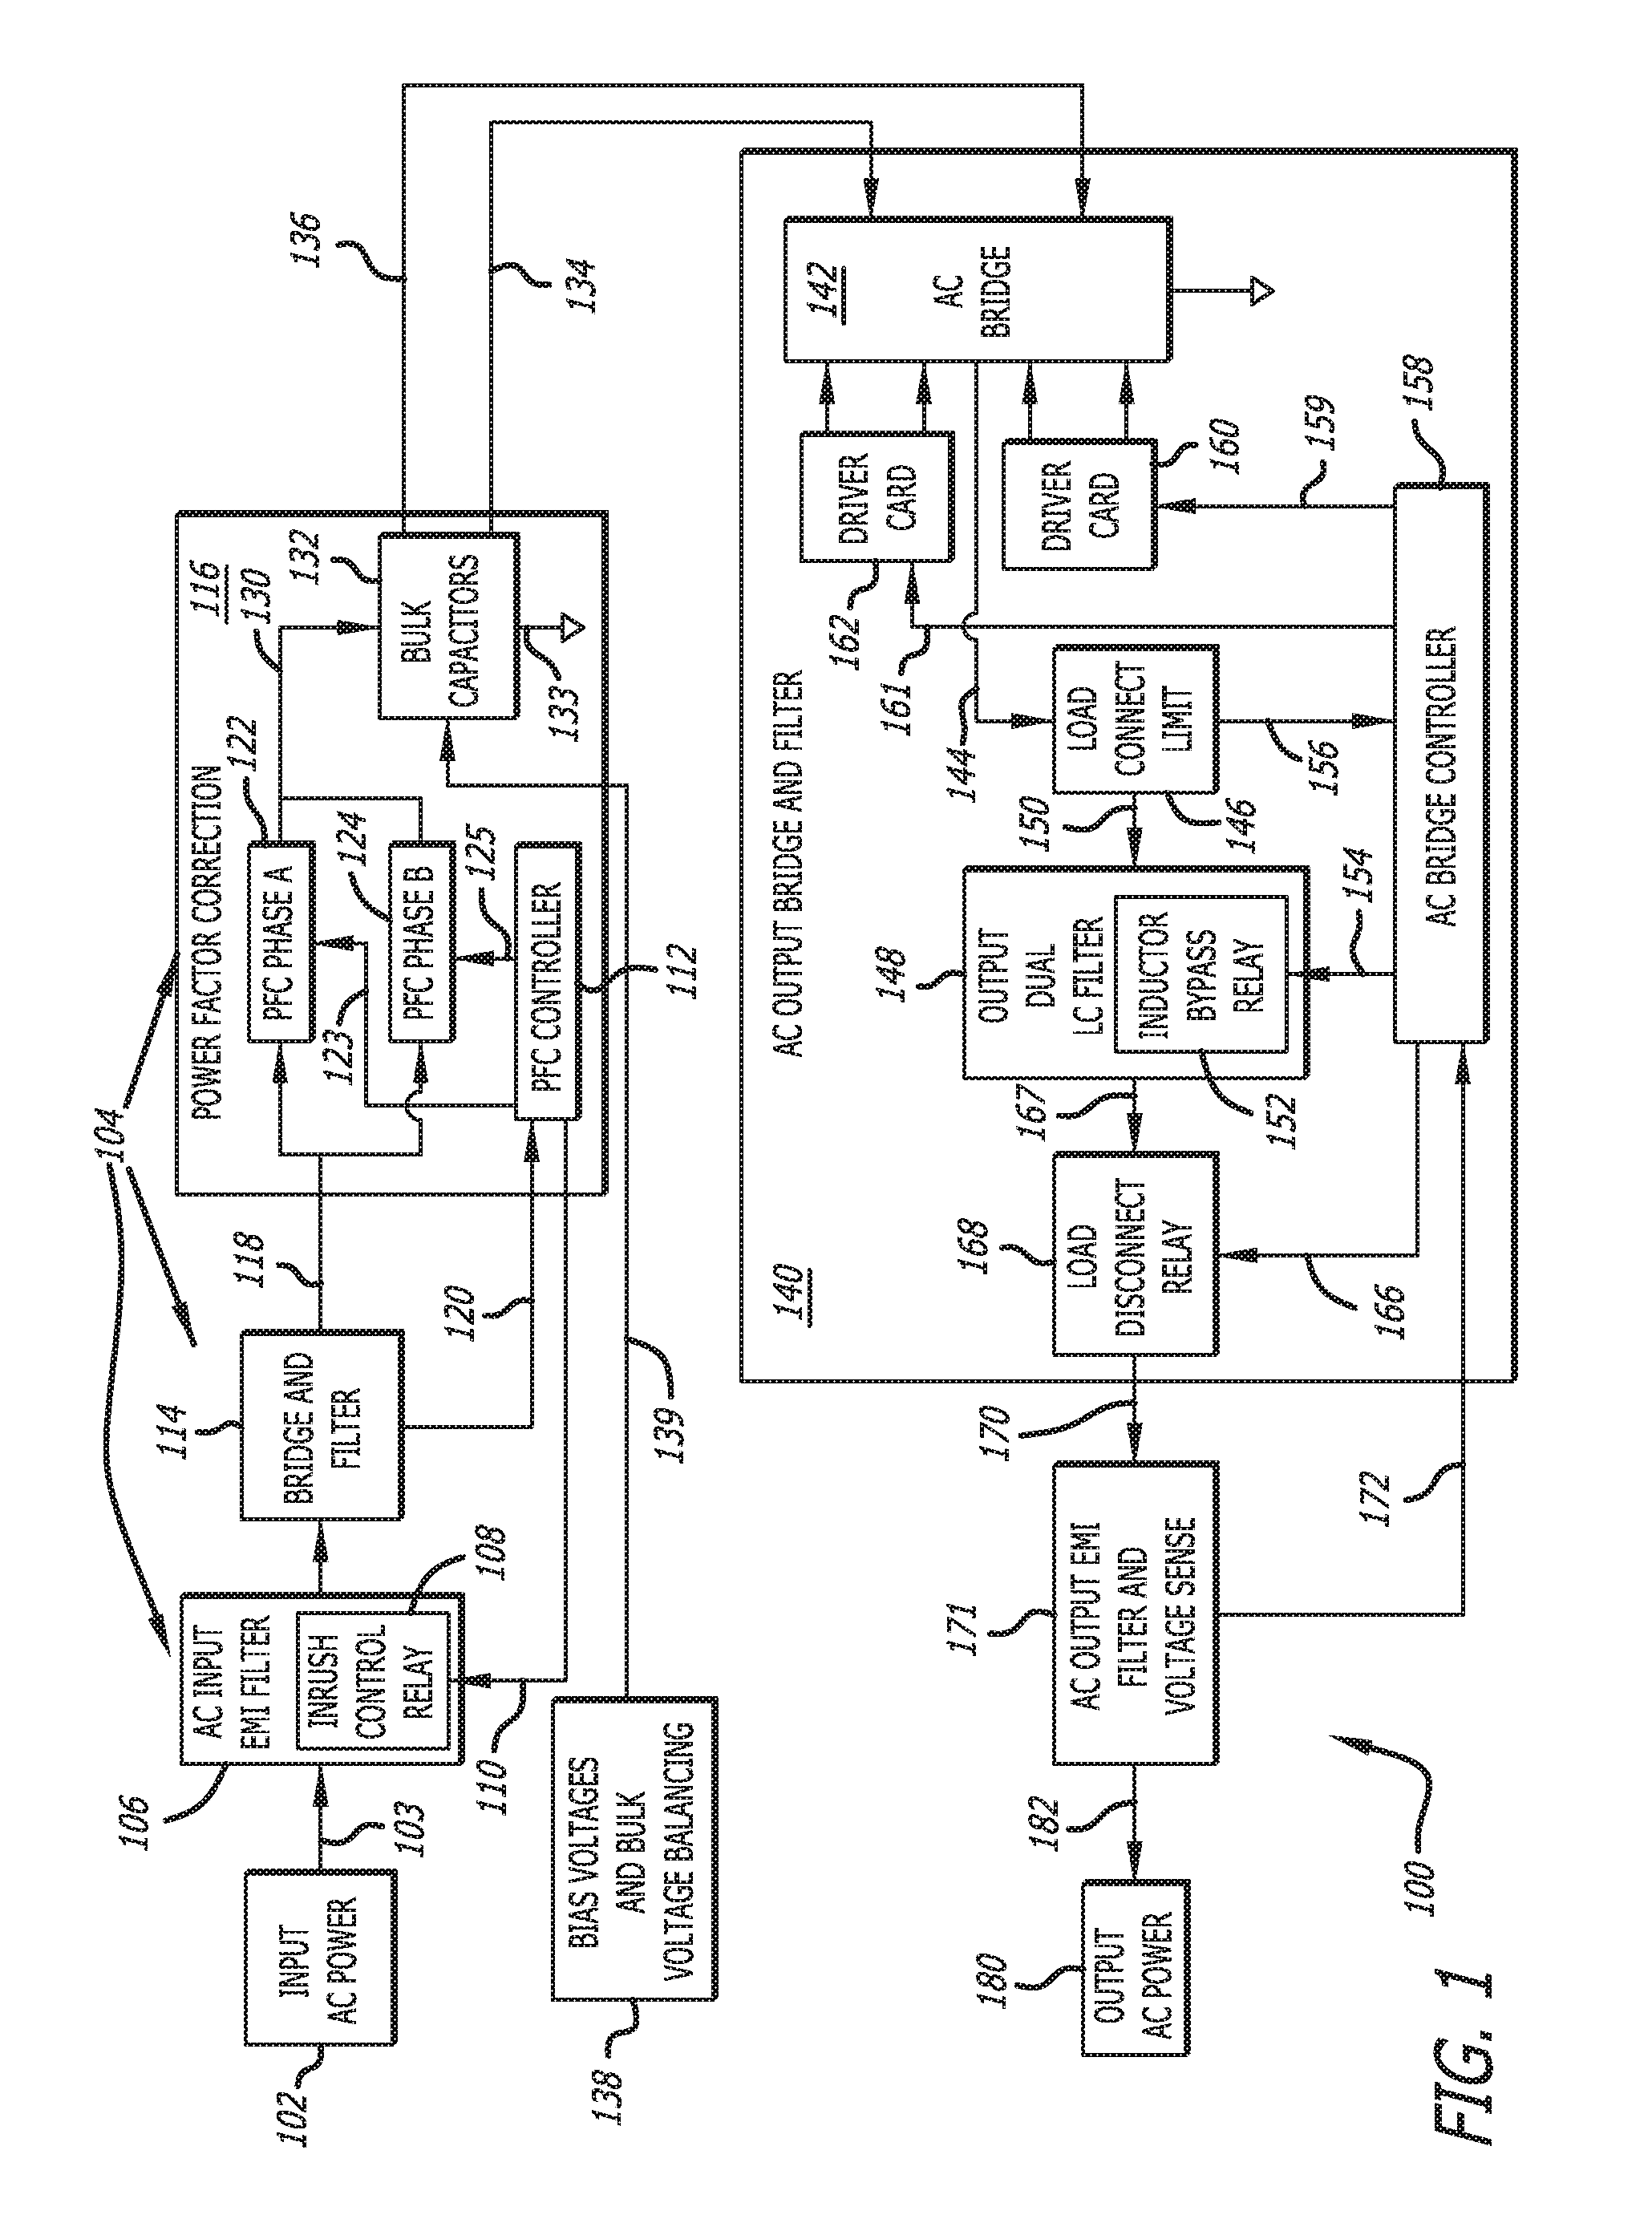 Adaptive AC power exchanger